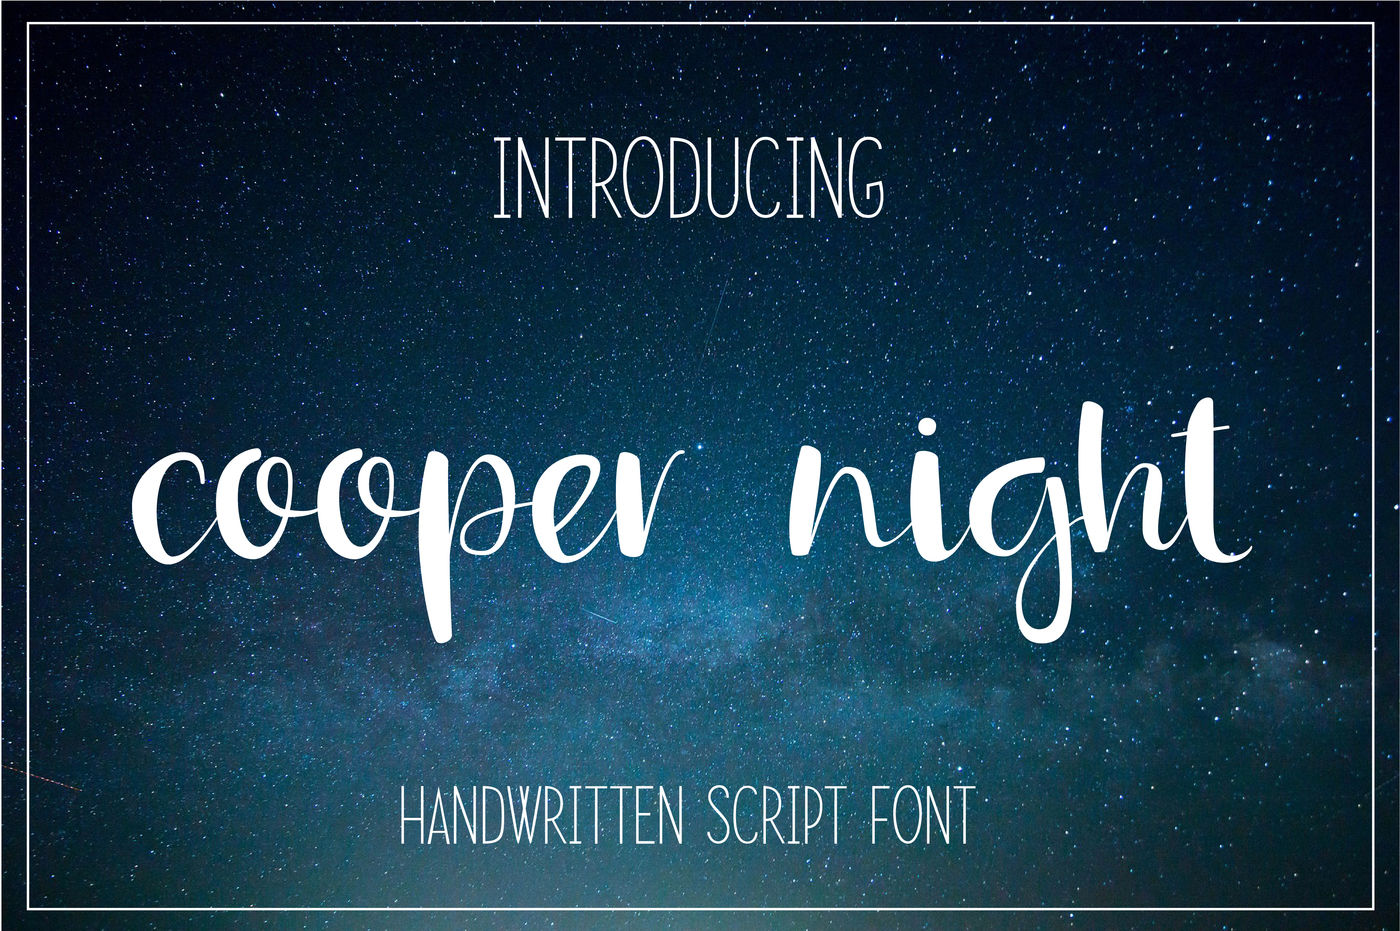 Cooper Night Brush Script Font By Sunday Nomad Thehungryjpeg Com